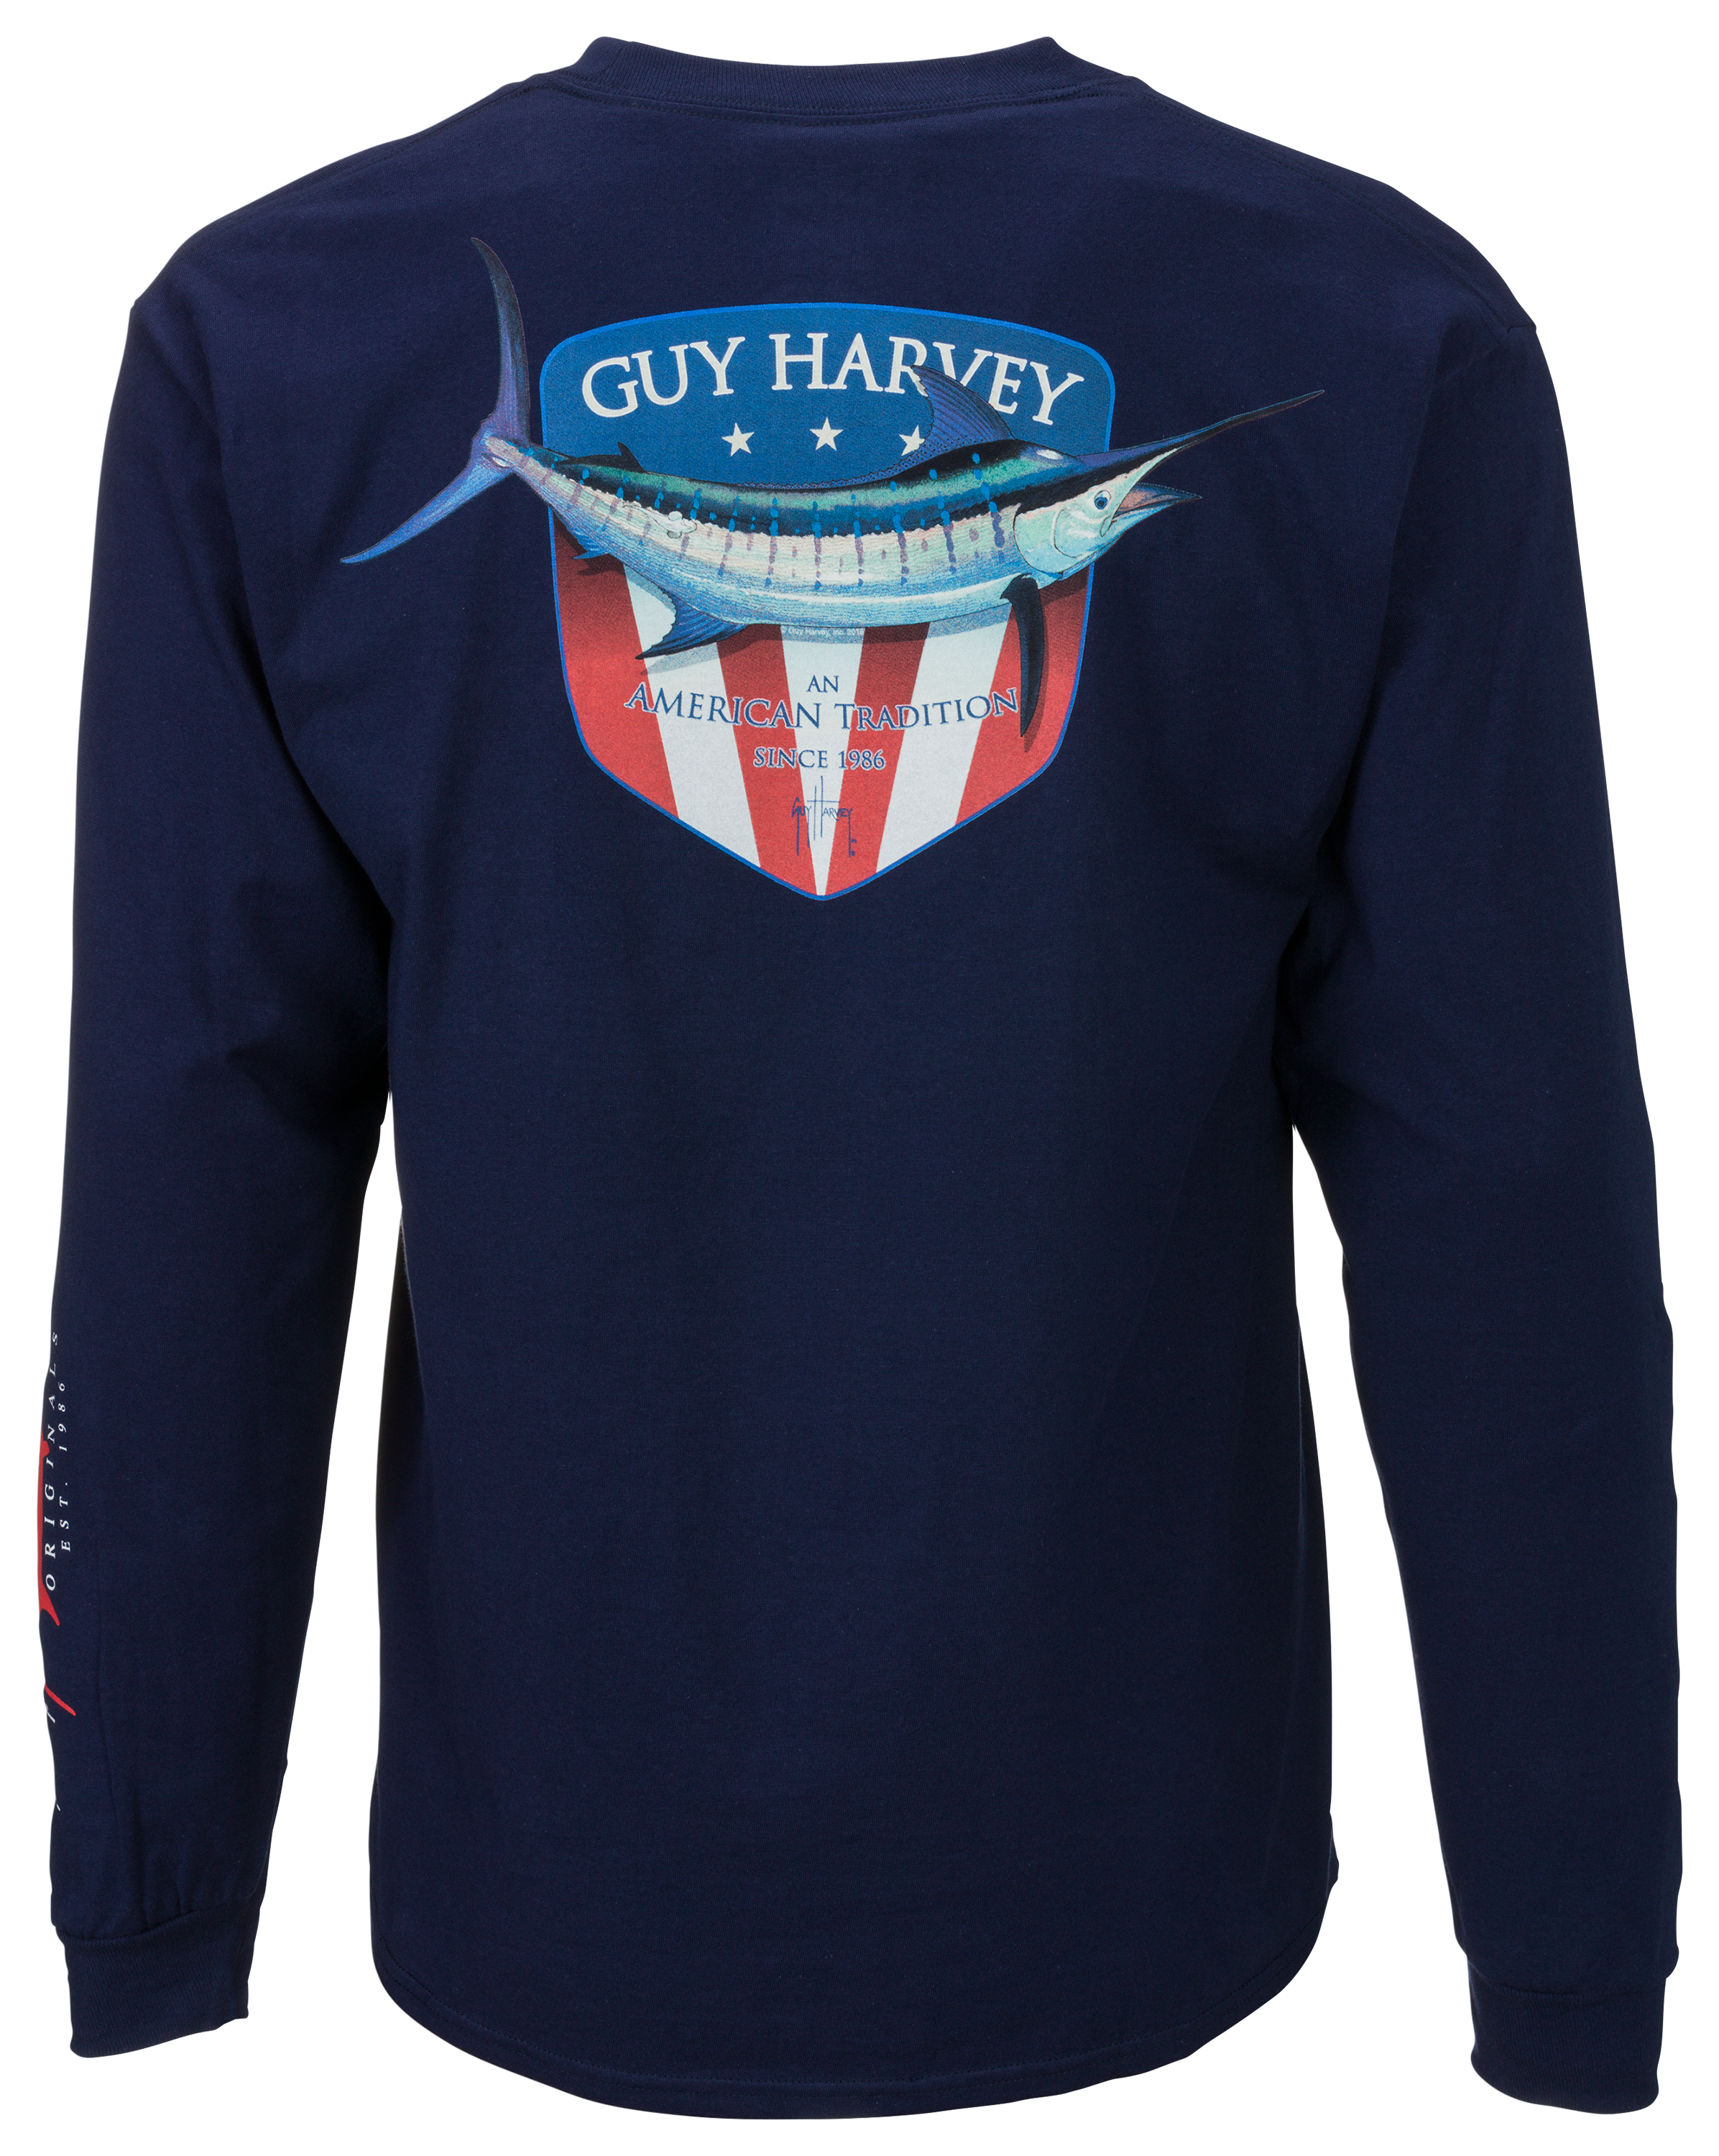 Guy Harvey Down Home Long-Sleeve T-Shirt for Men | Bass Pro Shops